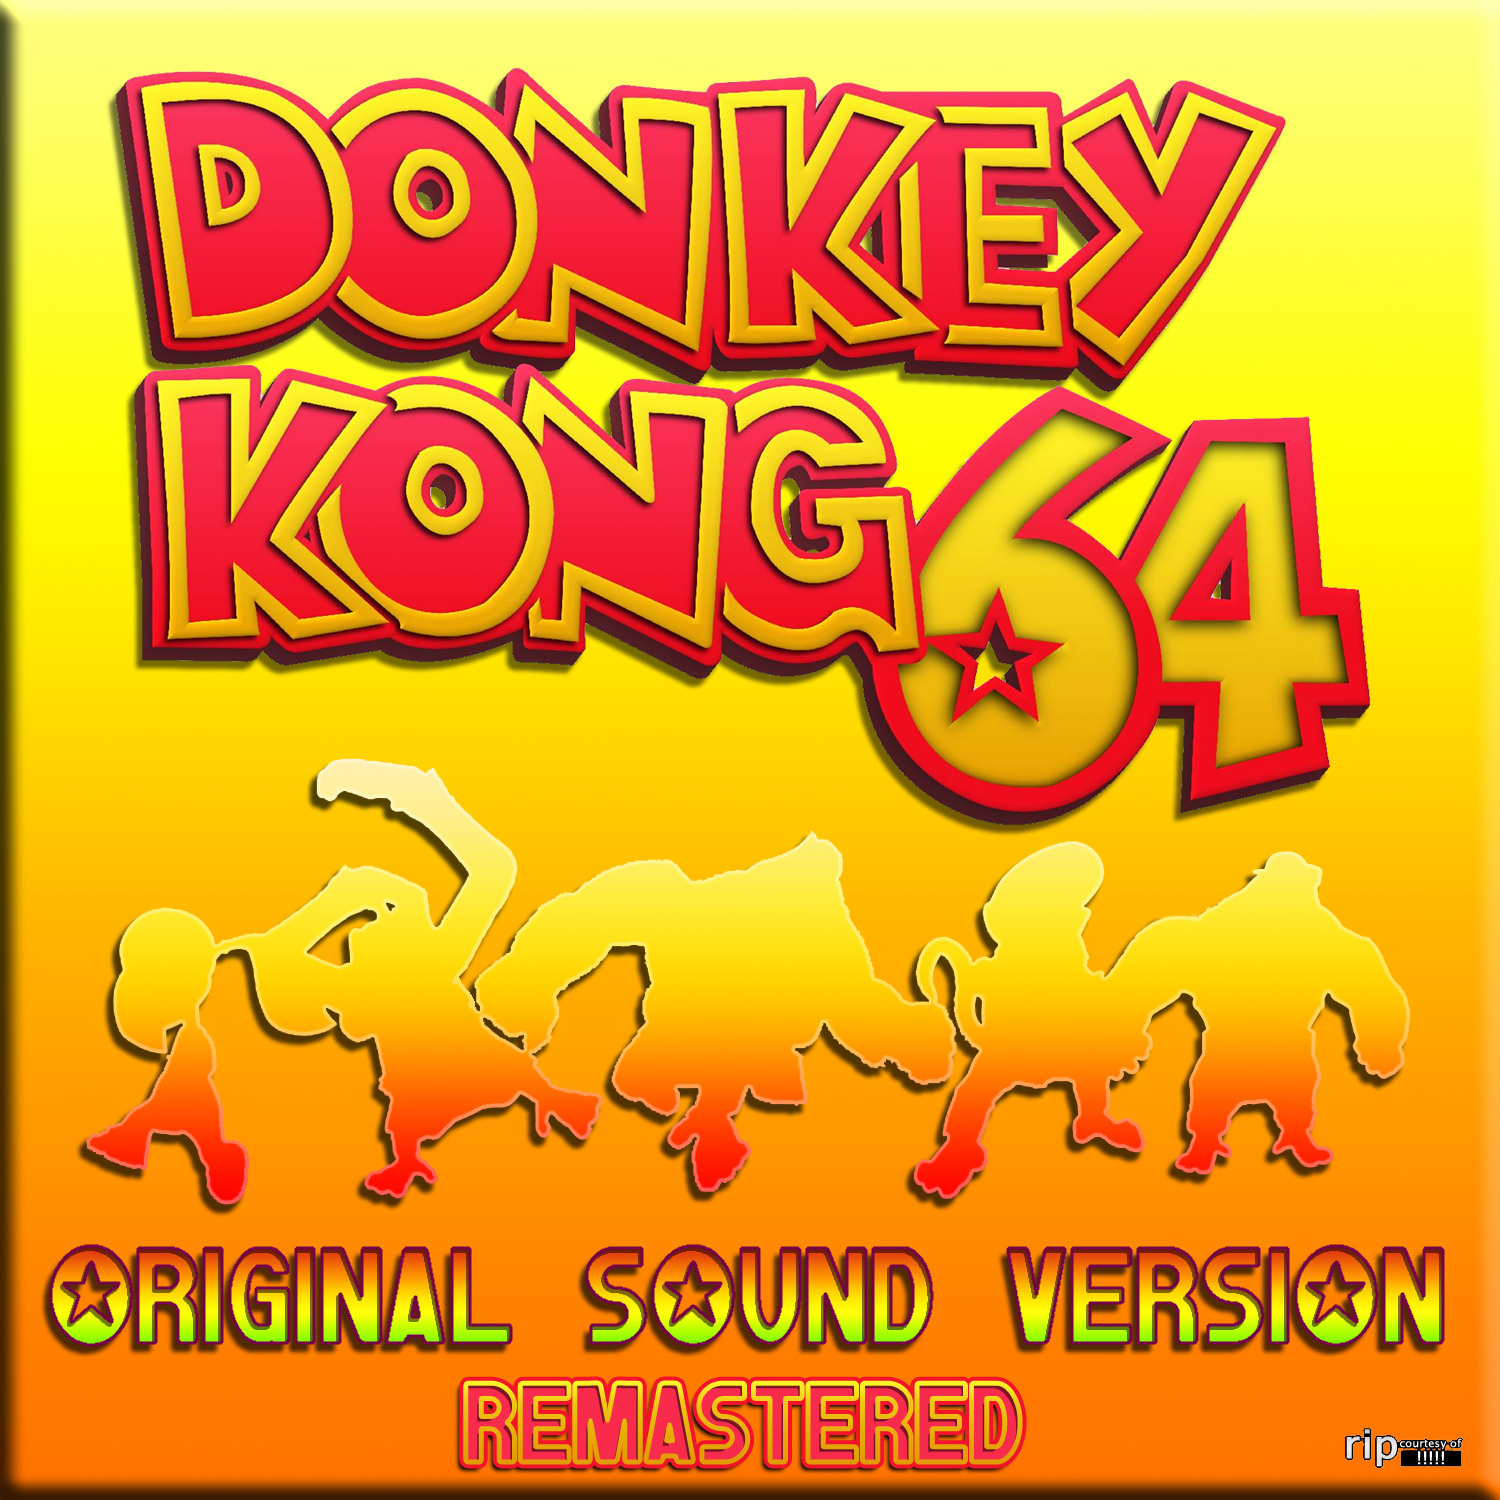 download yellow donkey kong 64